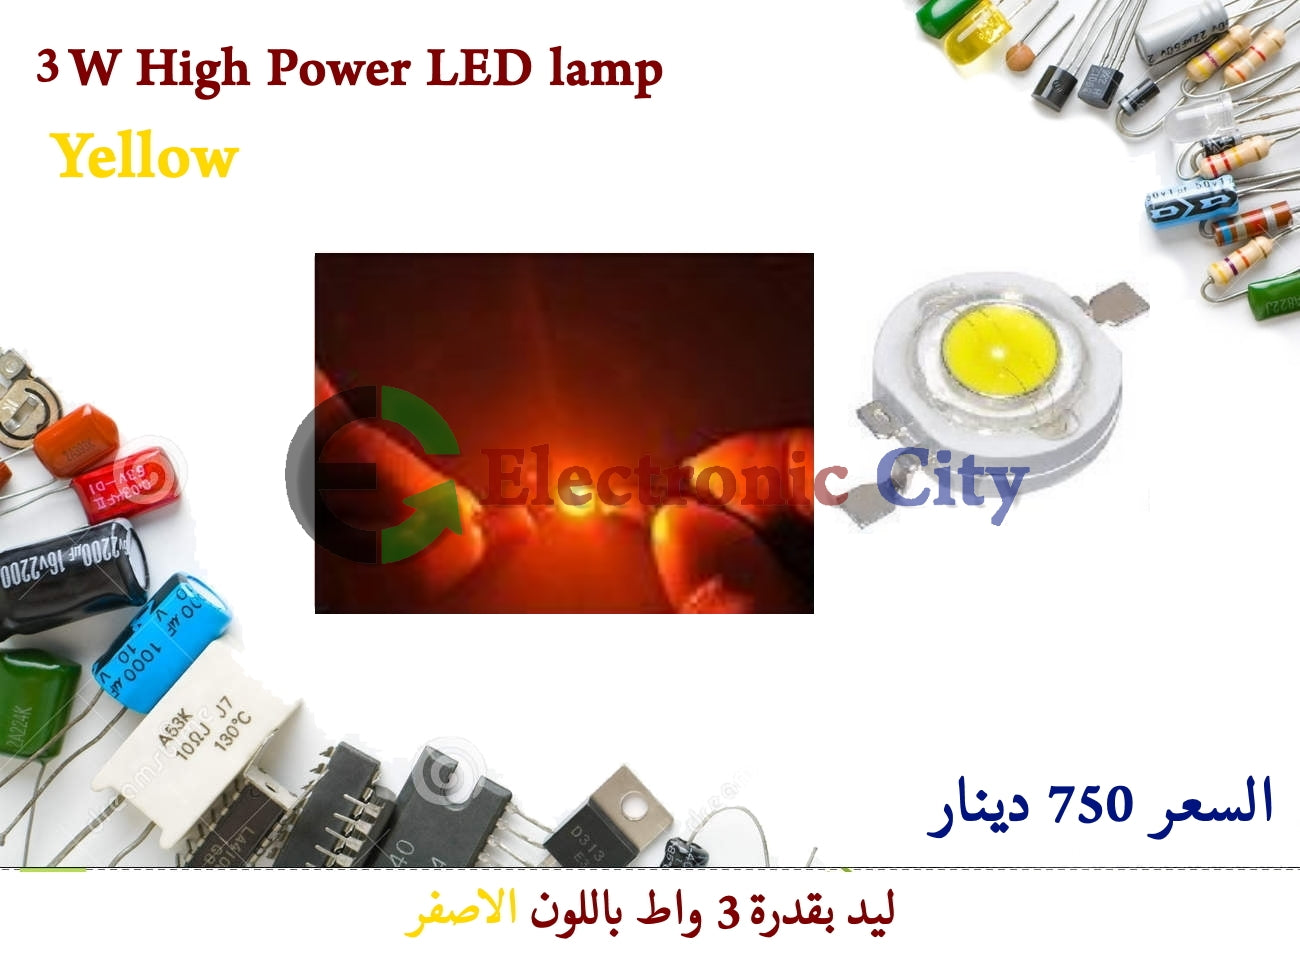 3W High Power LED lamp Yellow